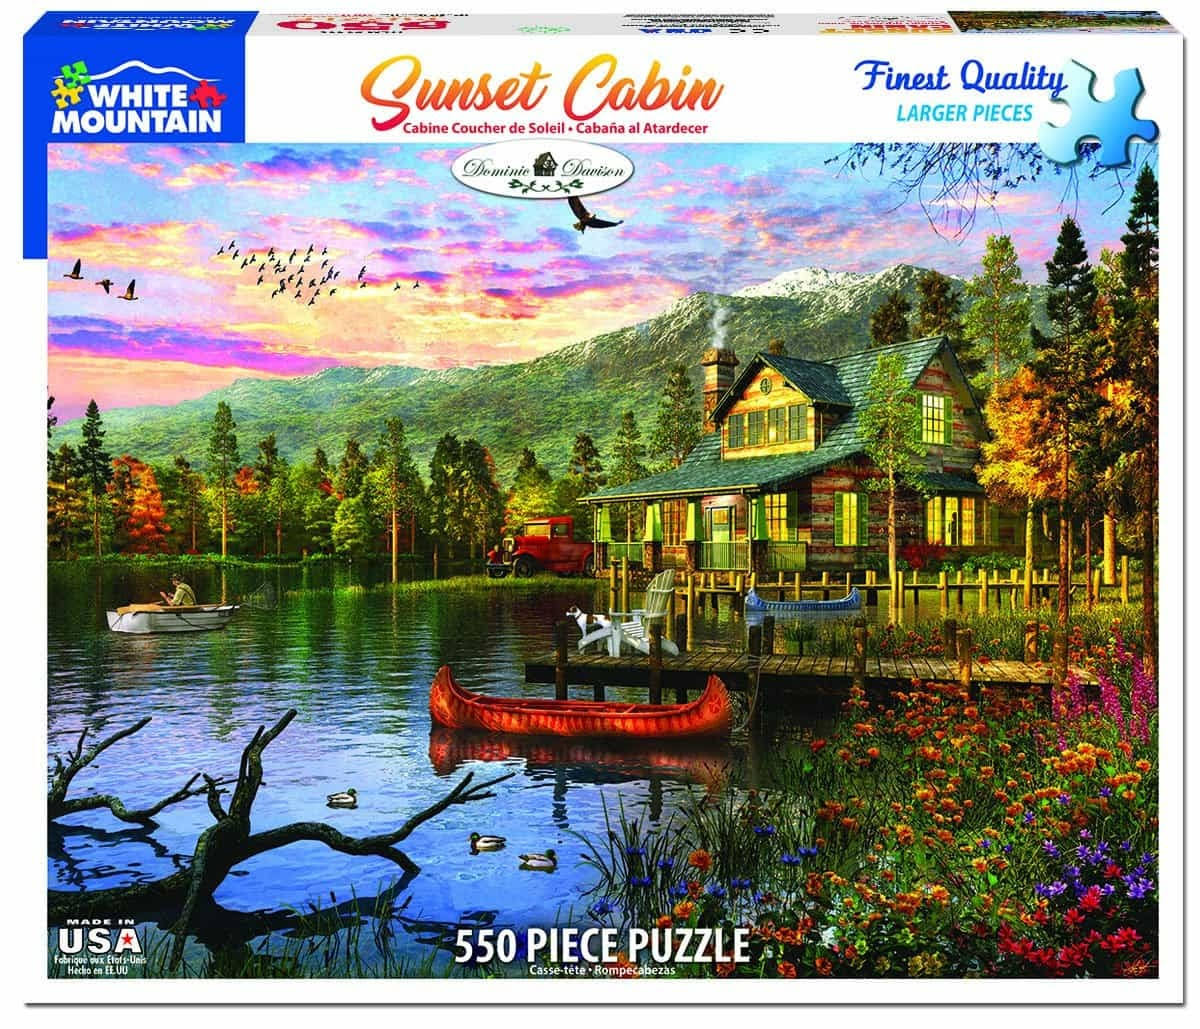 White MountainSunset Cabin Jigsaw Puzzles Set - 550pcs Set, 18" x 24"